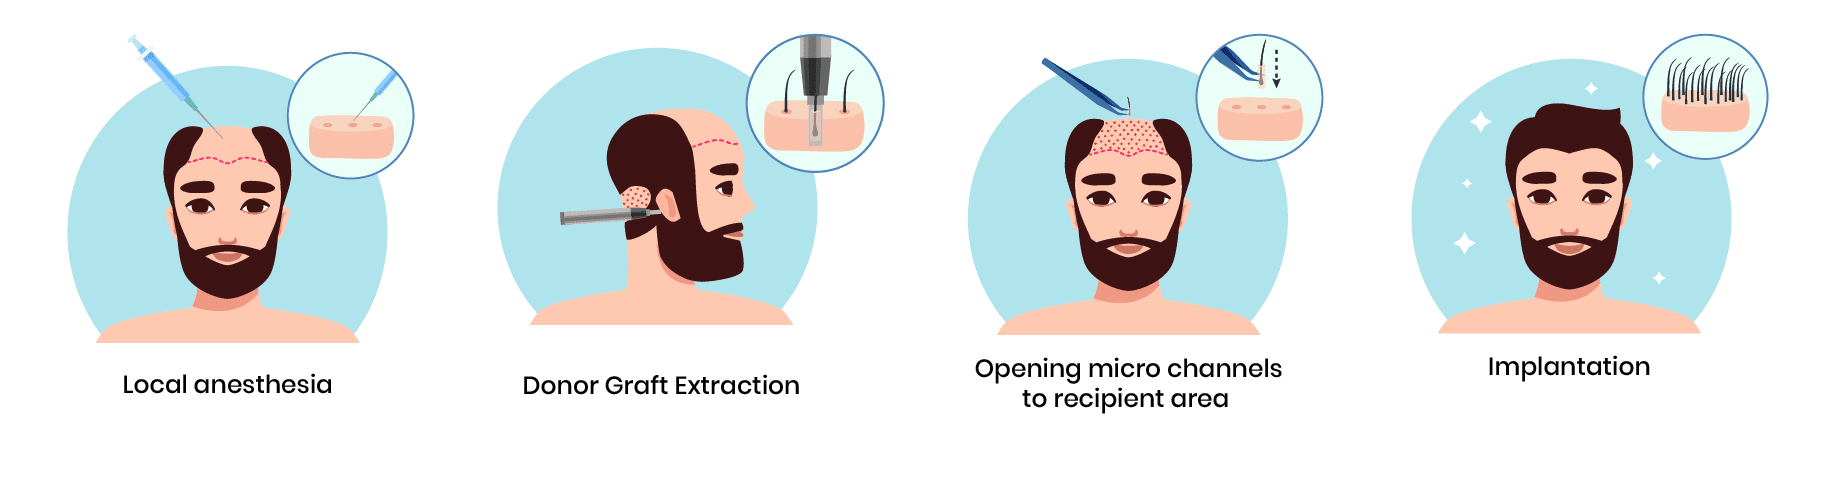 FUE Hair Transplant Technique, Method at 